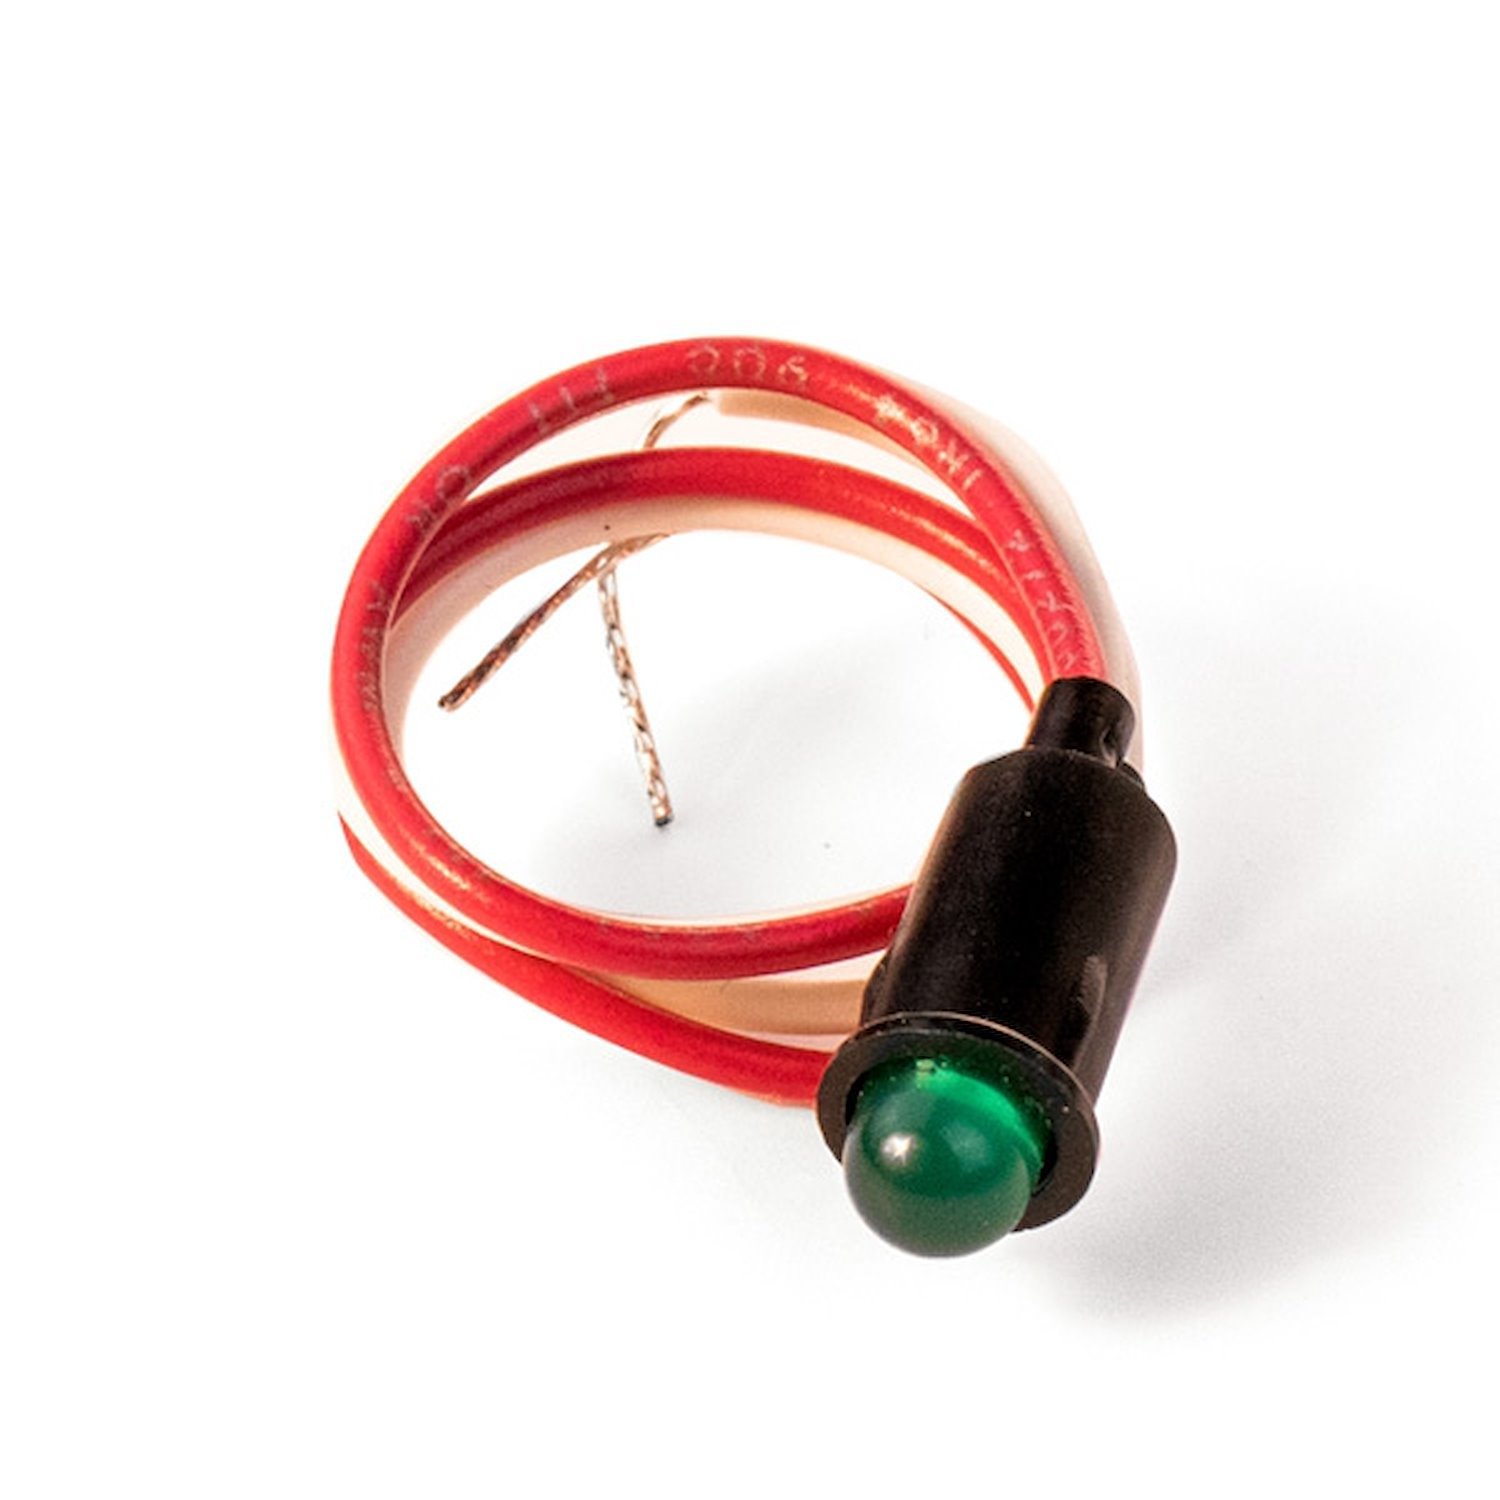 Green LED w/ Resistor